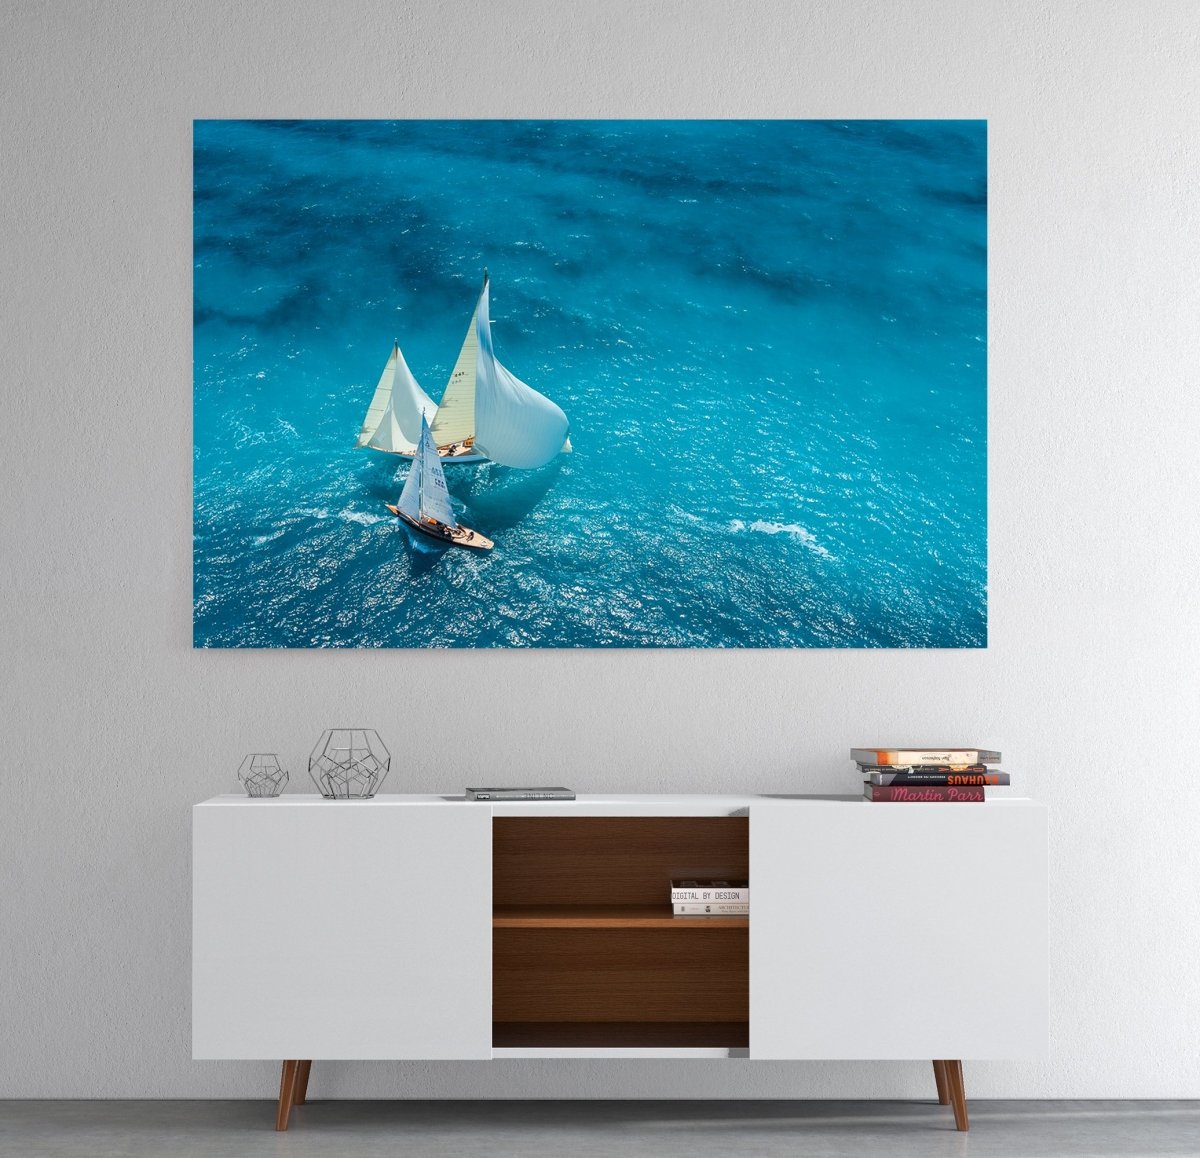 Boats Crossing on the Blue Ocean Canvas Print Wall Art - 1X971984 - Art Fever - Art Fever